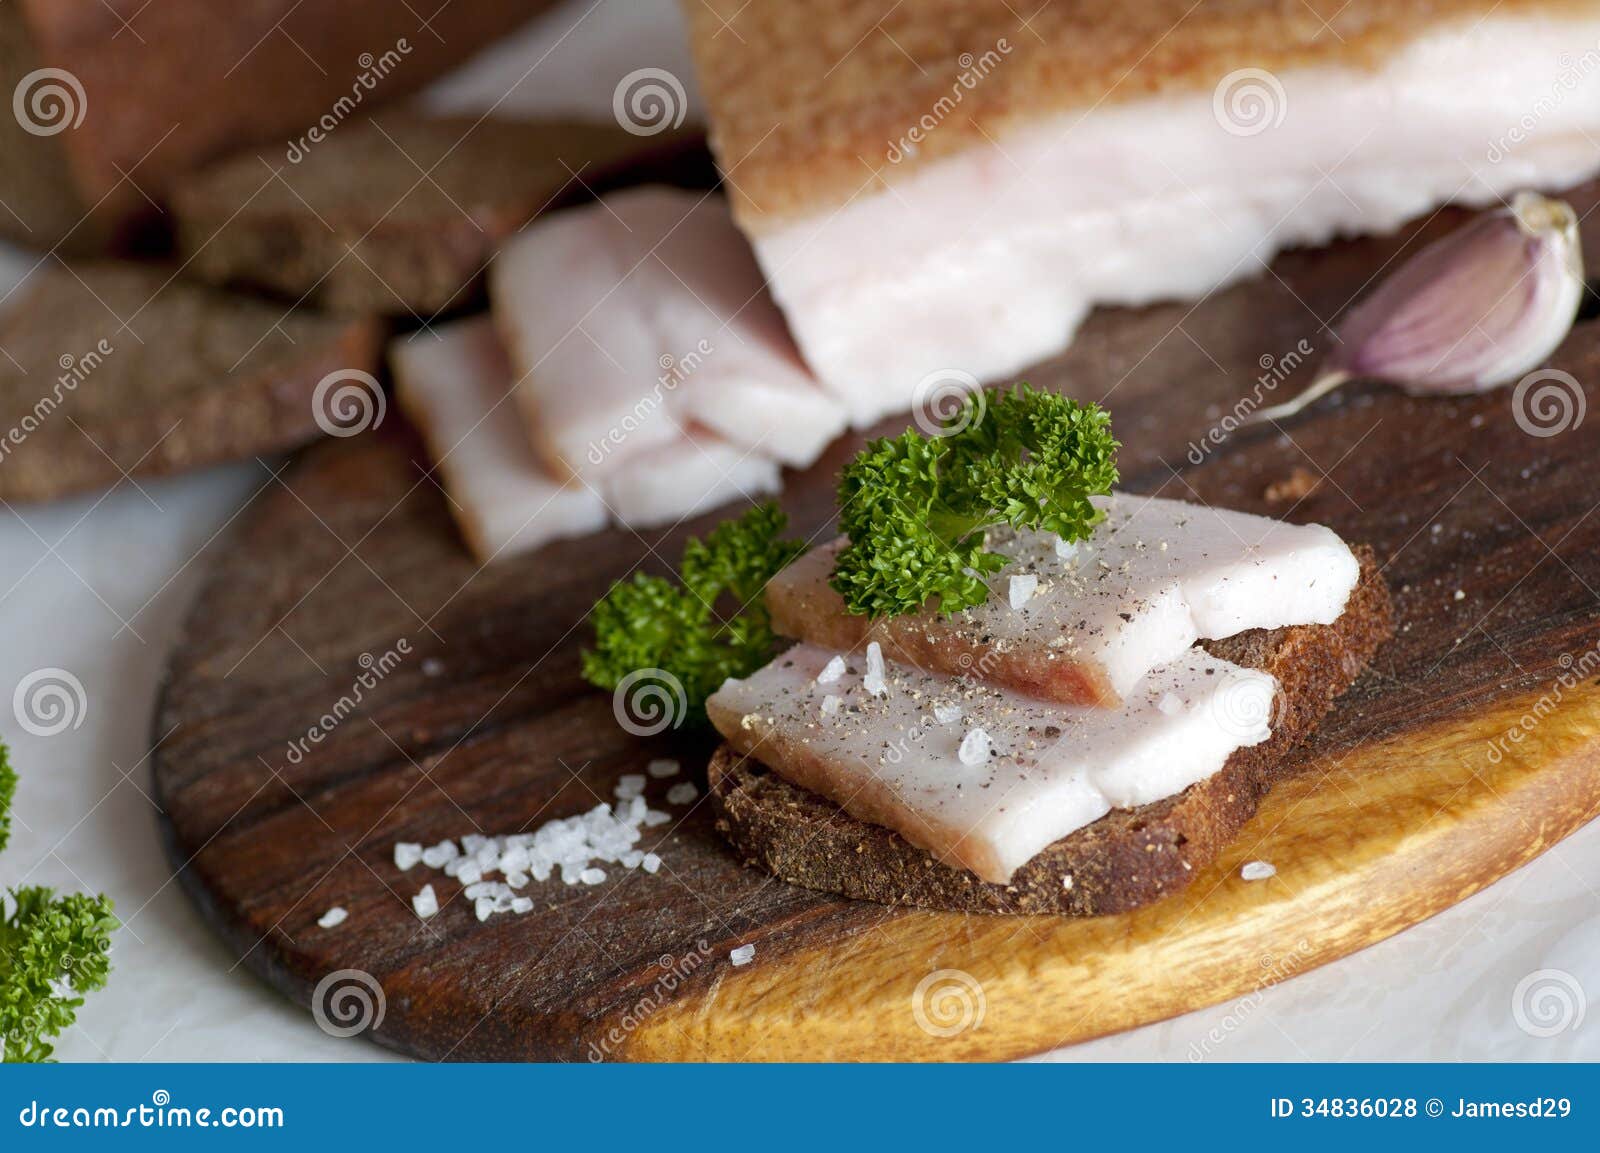 salted pork lard (salo) on rye bread